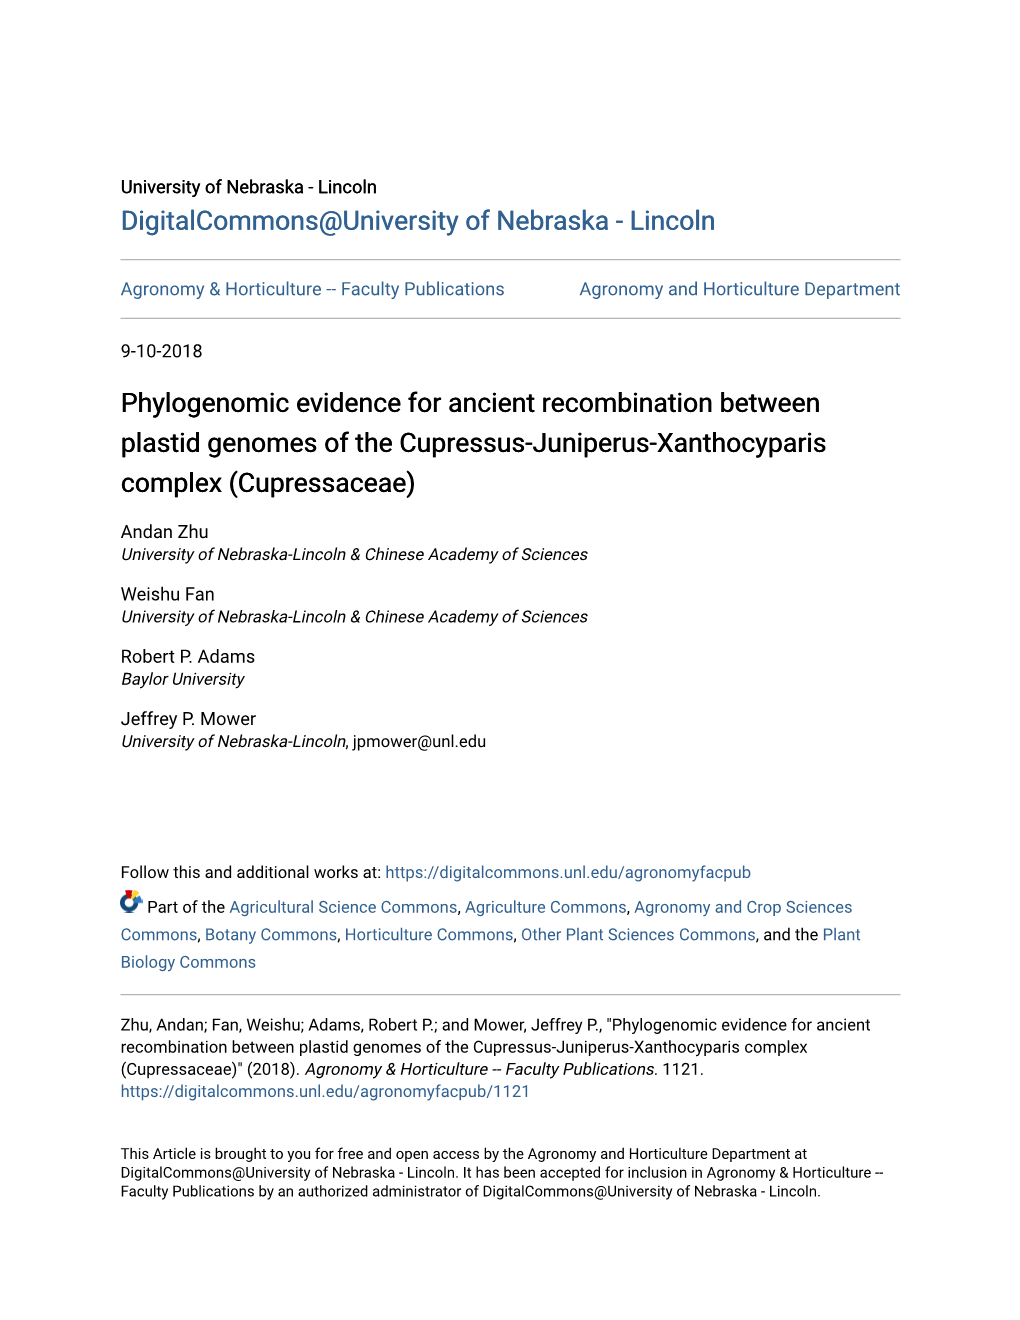 Phylogenomic Evidence for Ancient Recombination Between Plastid Genomes of the Cupressus-Juniperus-Xanthocyparis Complex (Cupressaceae)